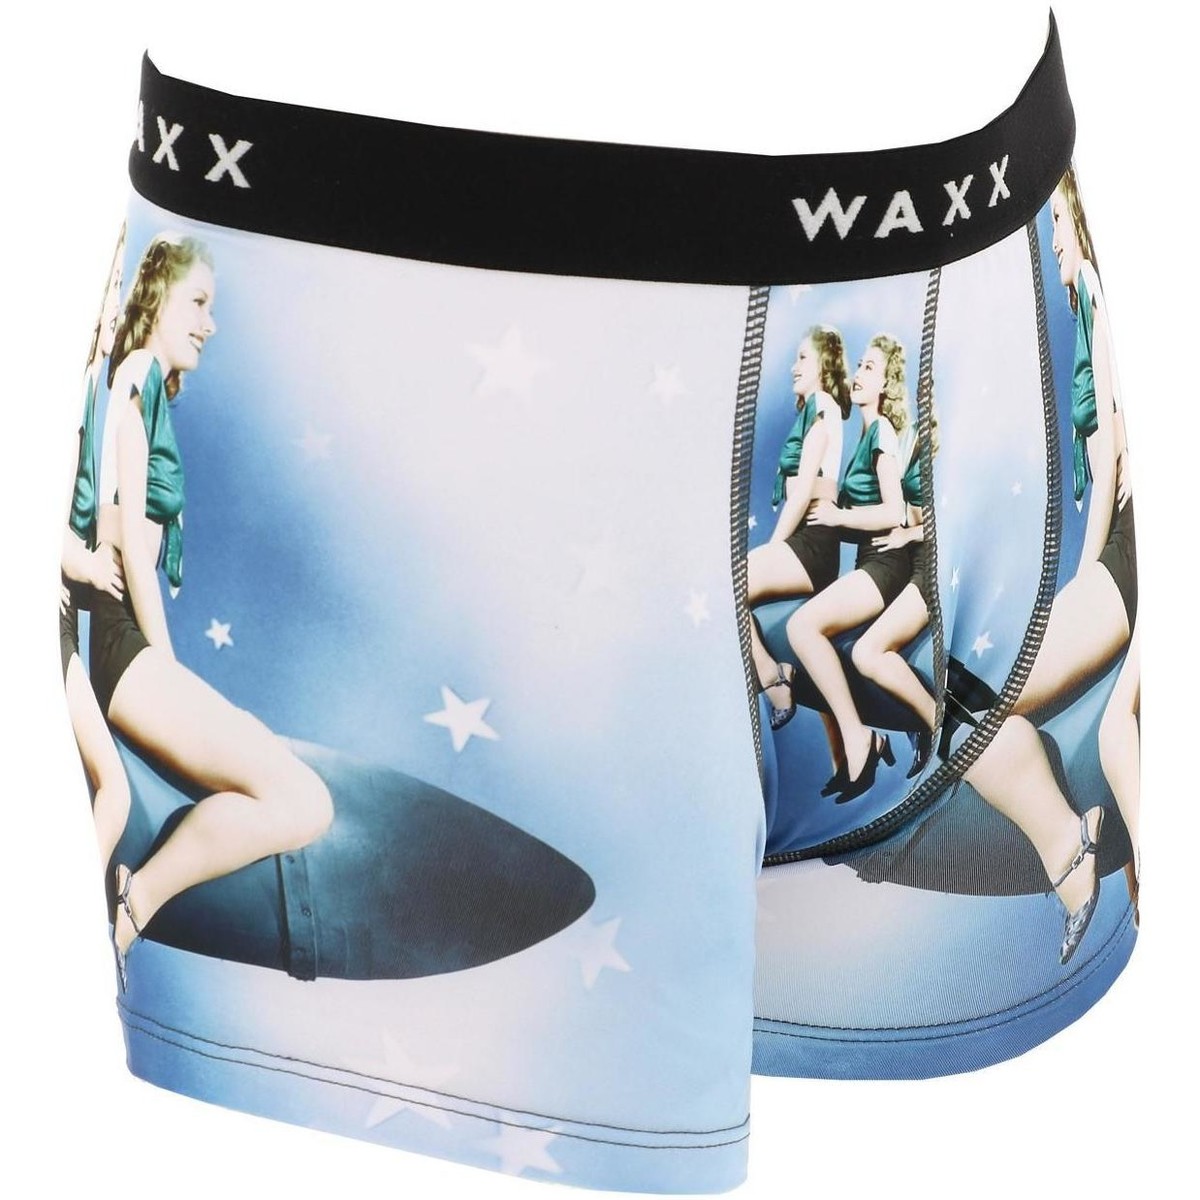 Waxx Bleu Space boxer homme vintage annee 60 aUEU2Xc4